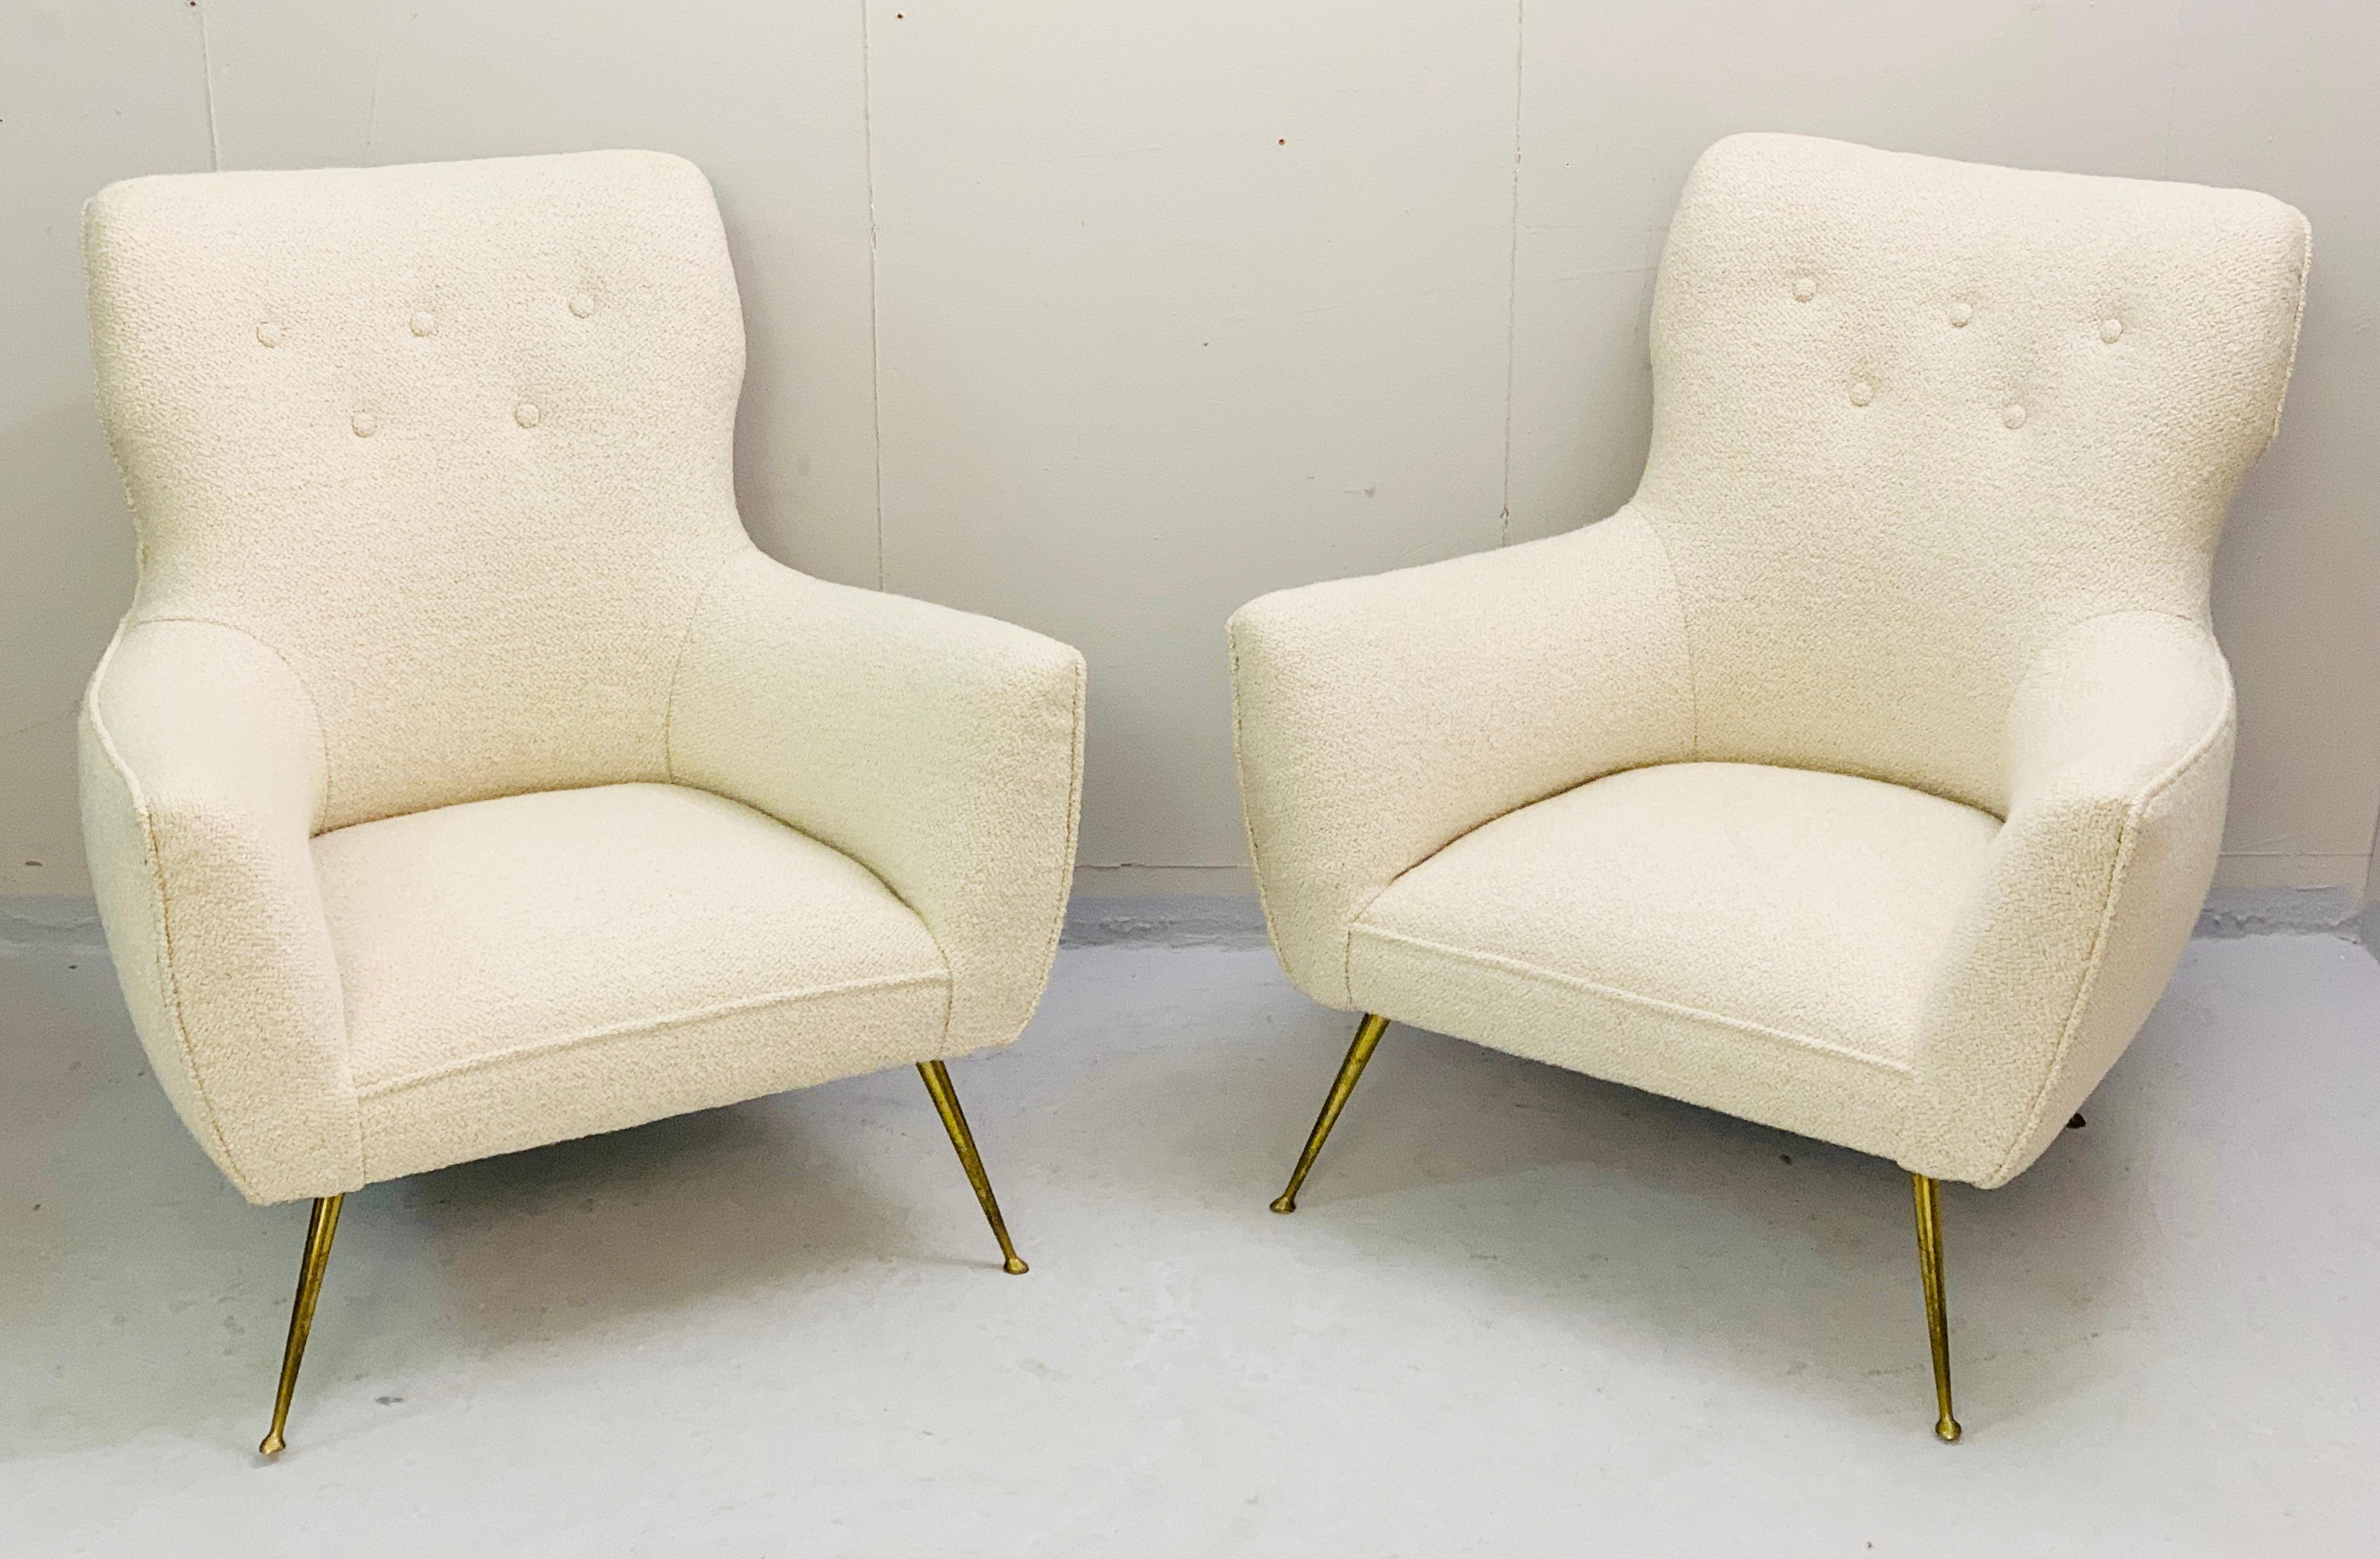 Pair of Italian armchairs - New upholstery, Italy, 1950s.